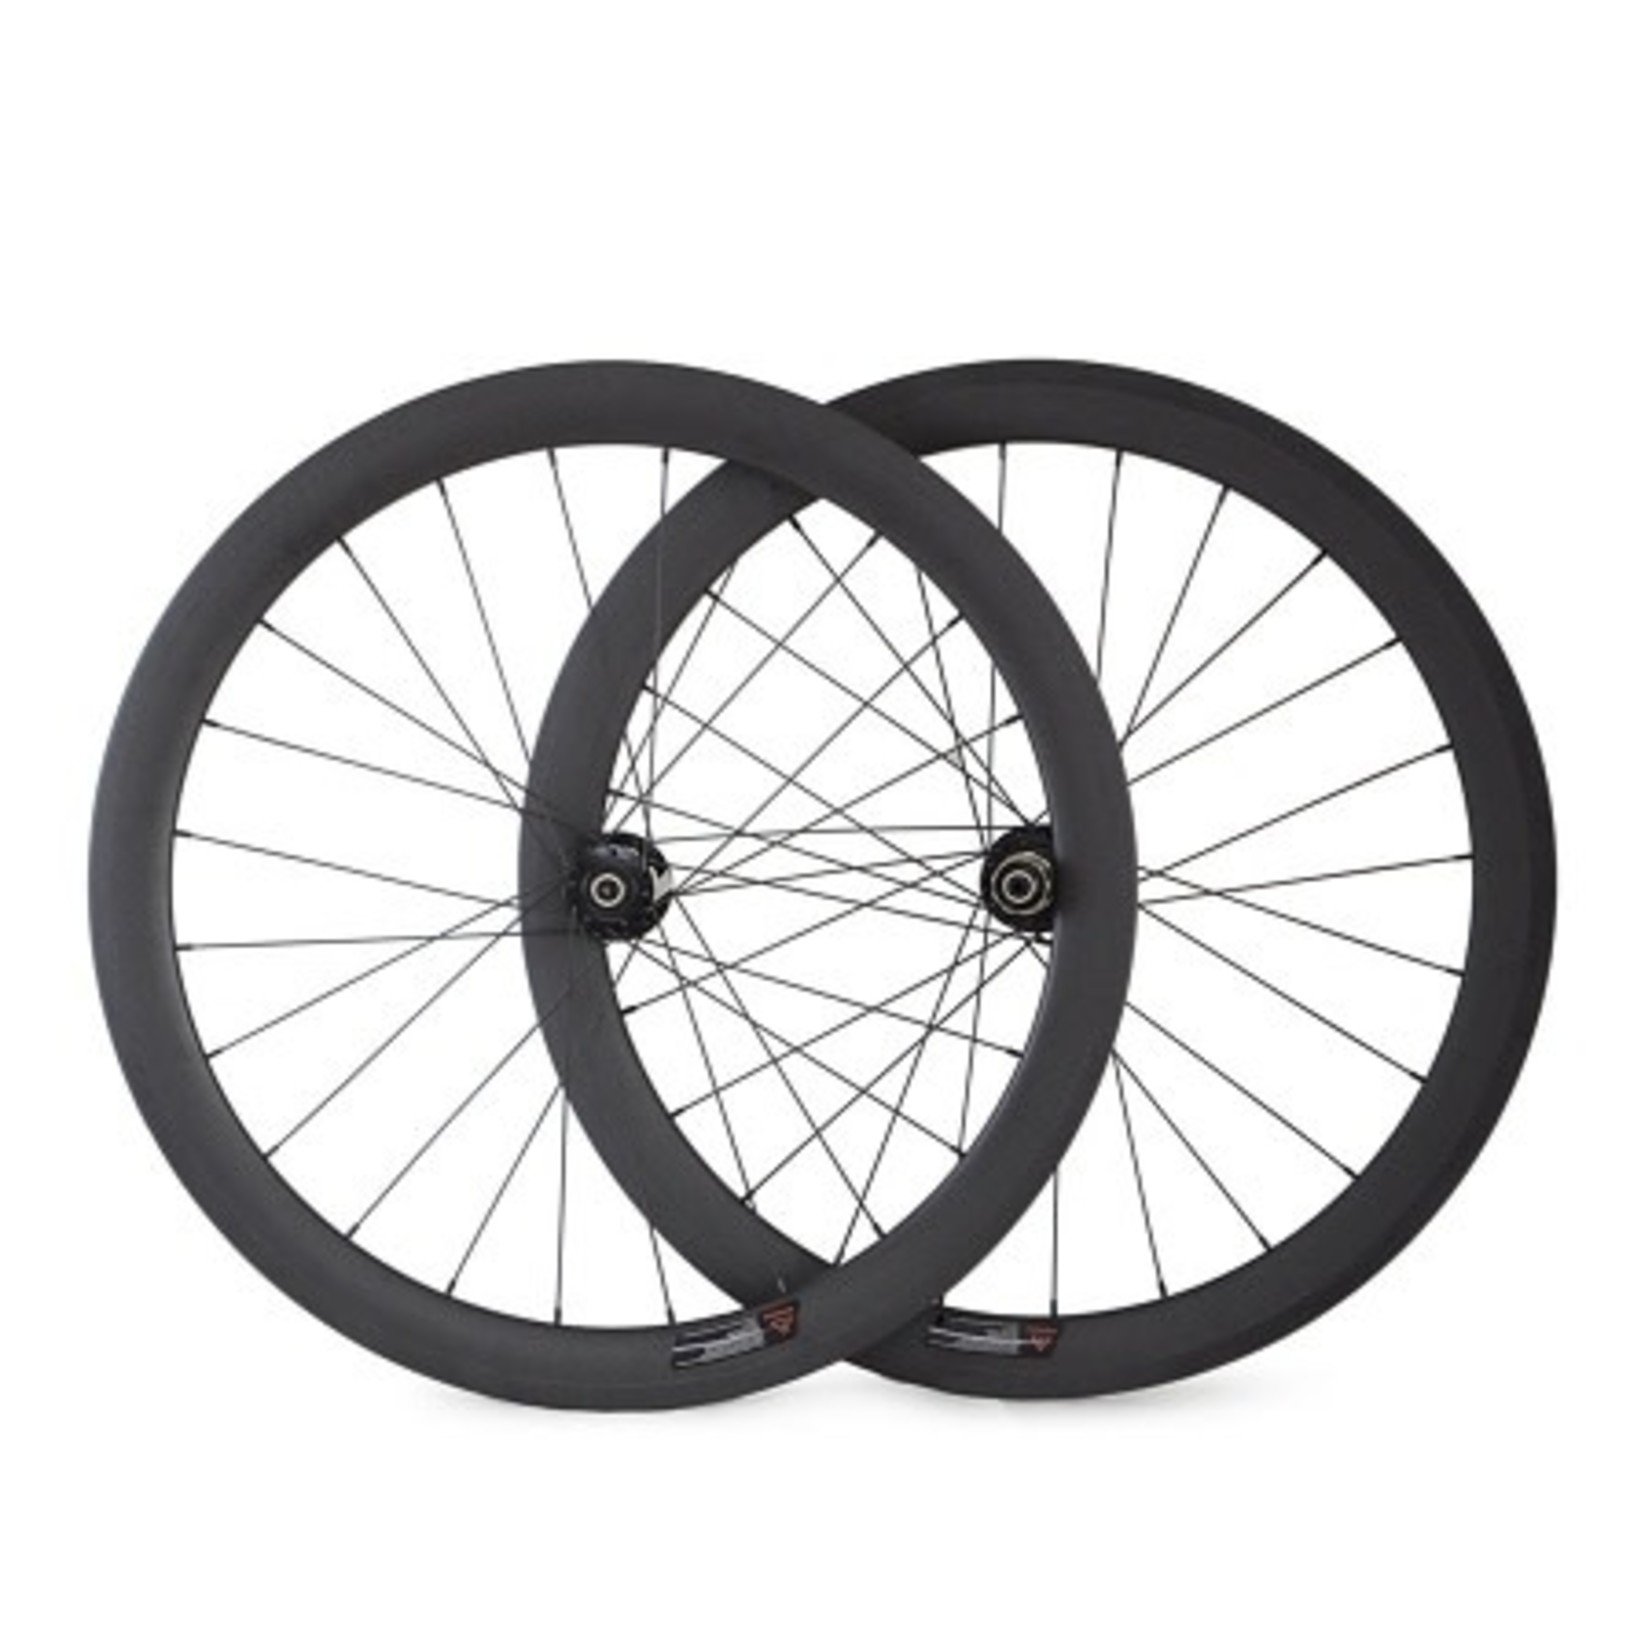 Custom Built Road bike wheels - Disc Brake - Carbon Fiber Tubular